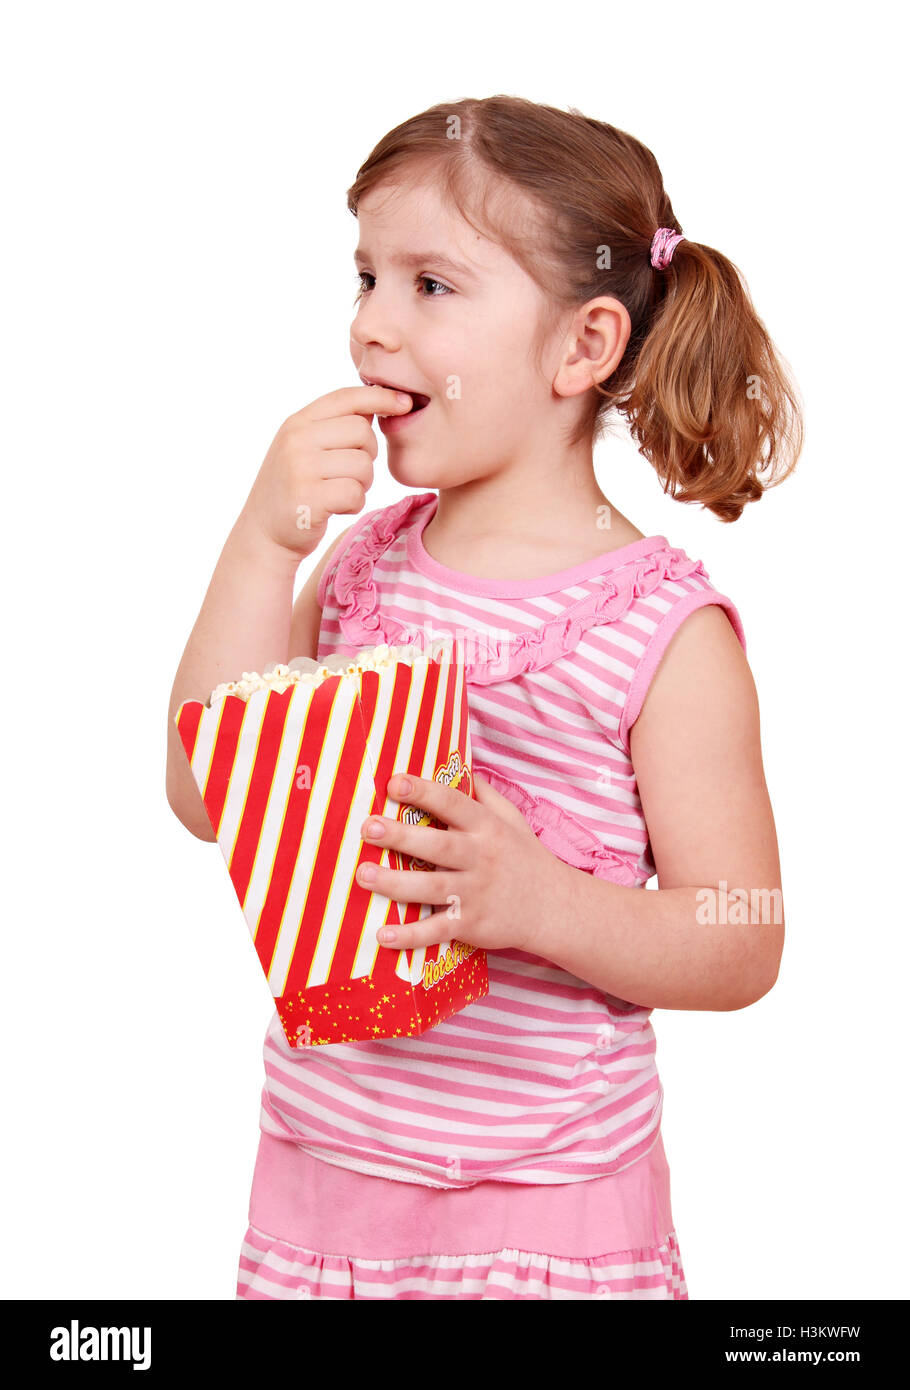 hungry little girl eat popcorn Stock Photo